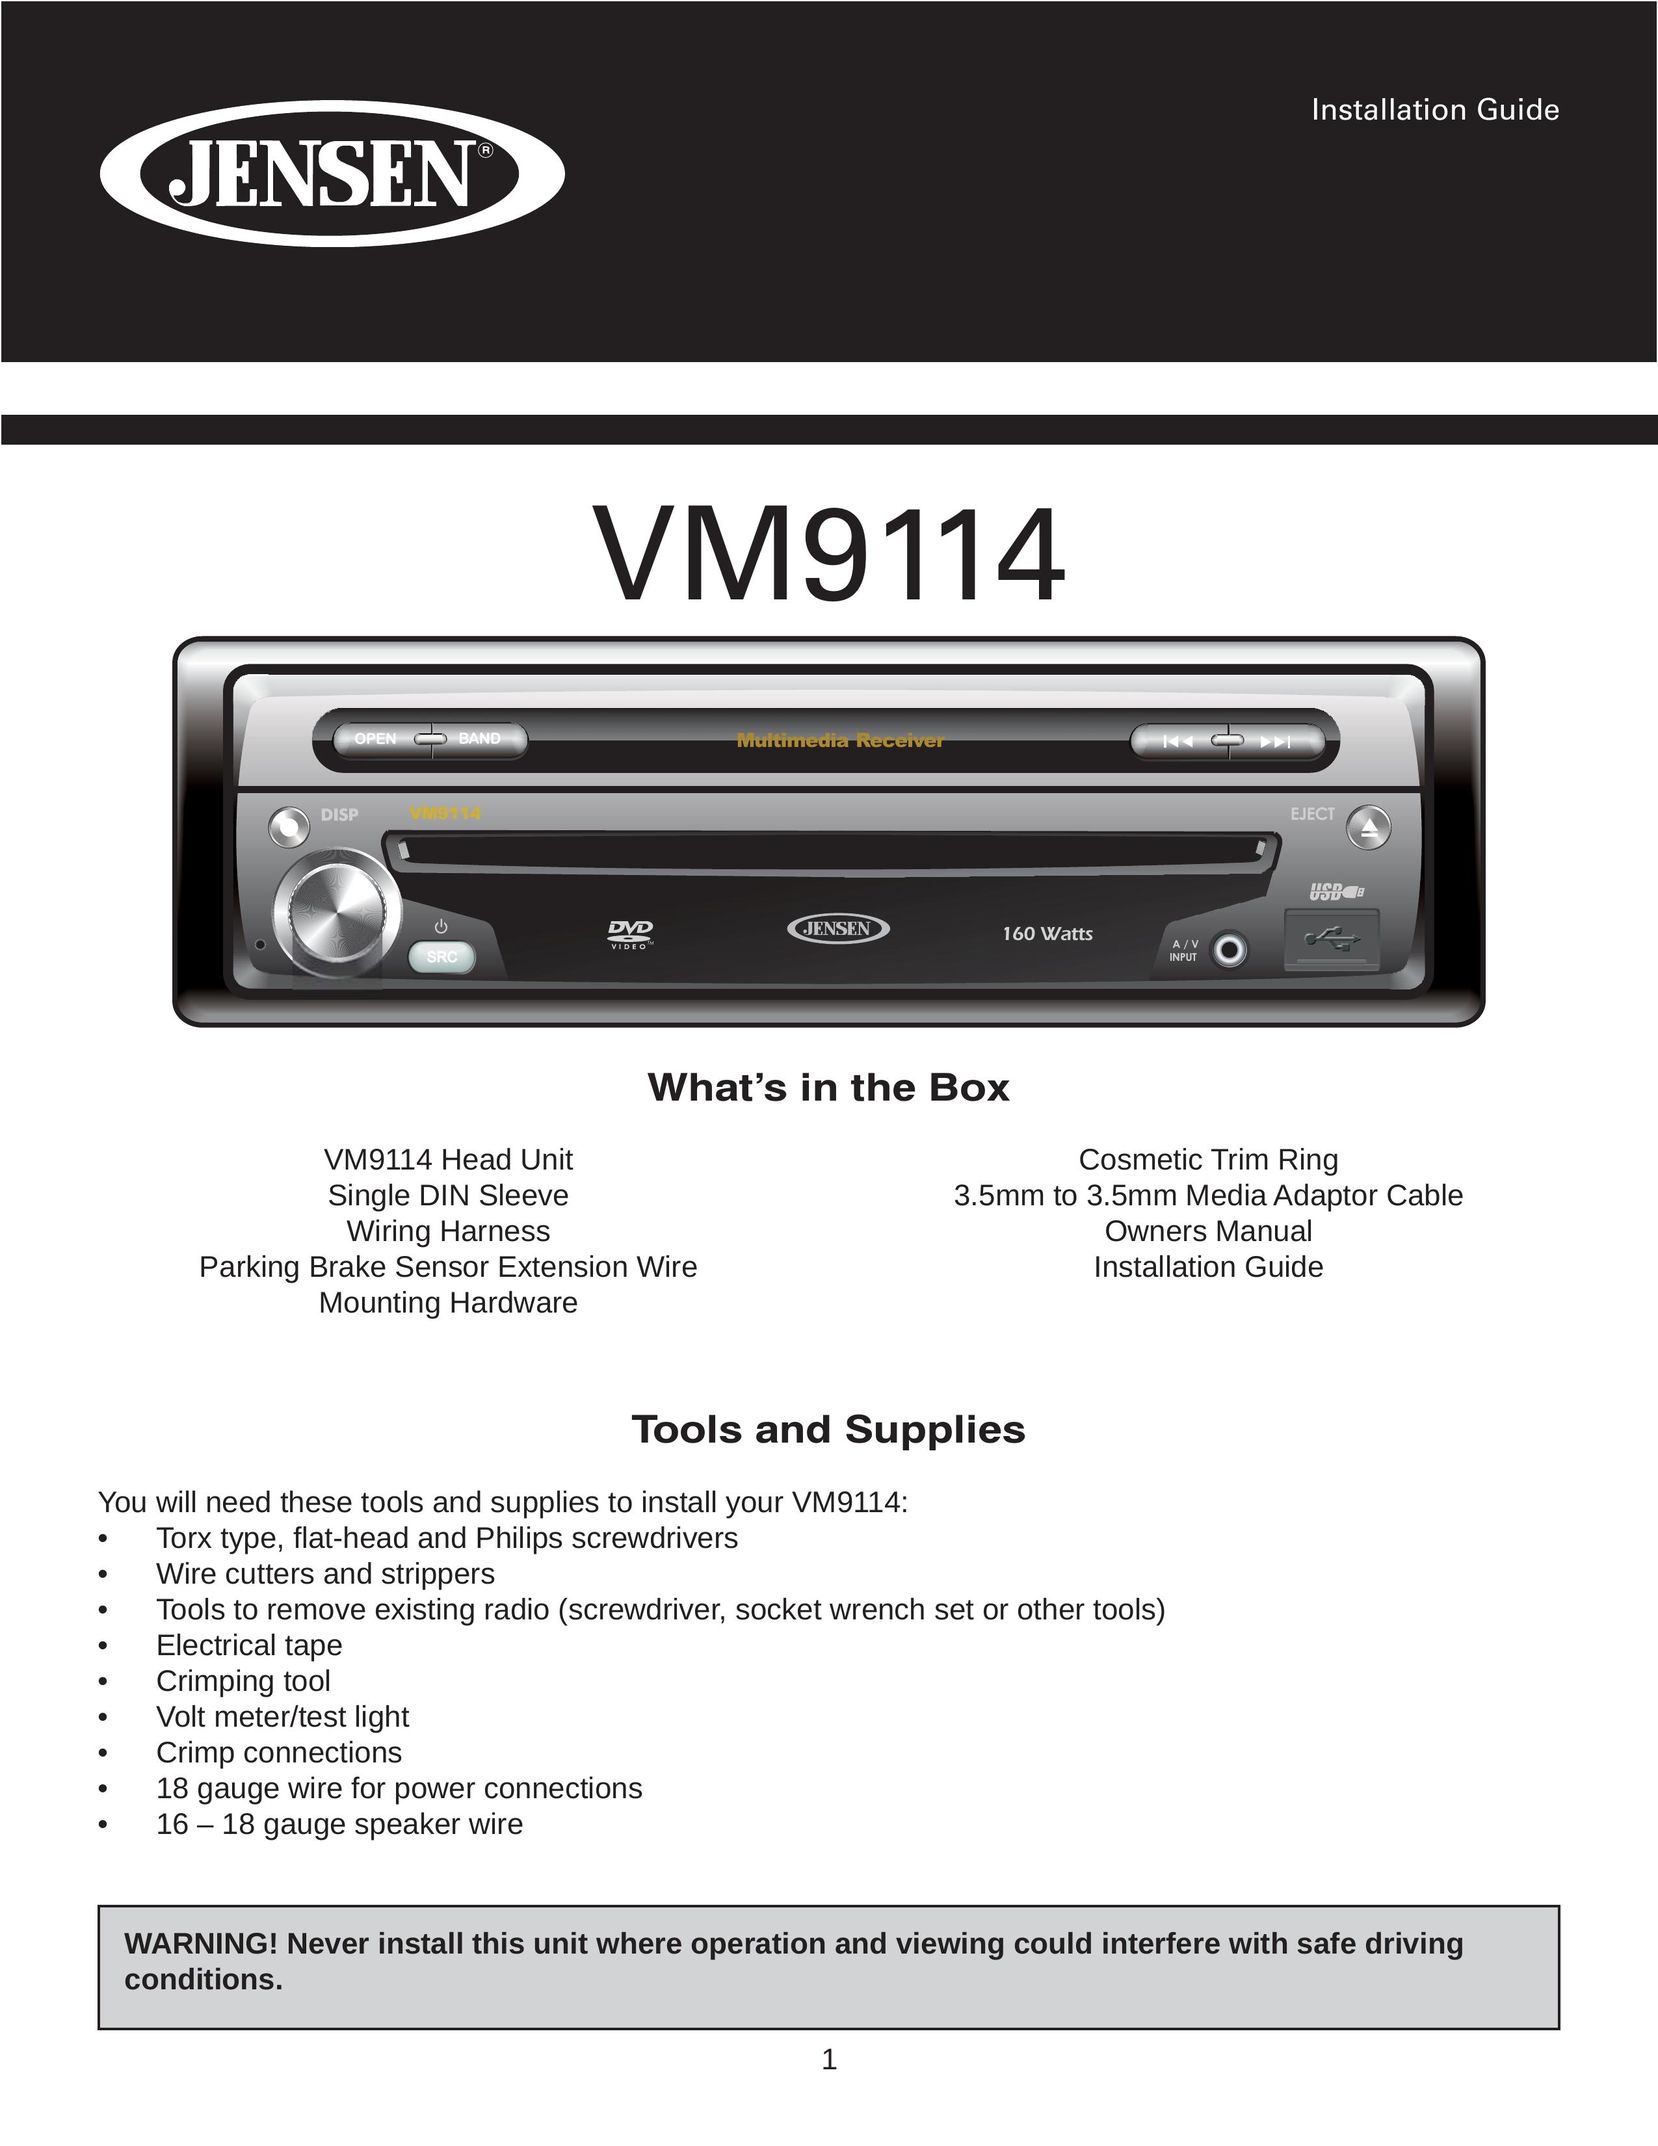 Jensen VM9114 Portable Multimedia Player User Manual